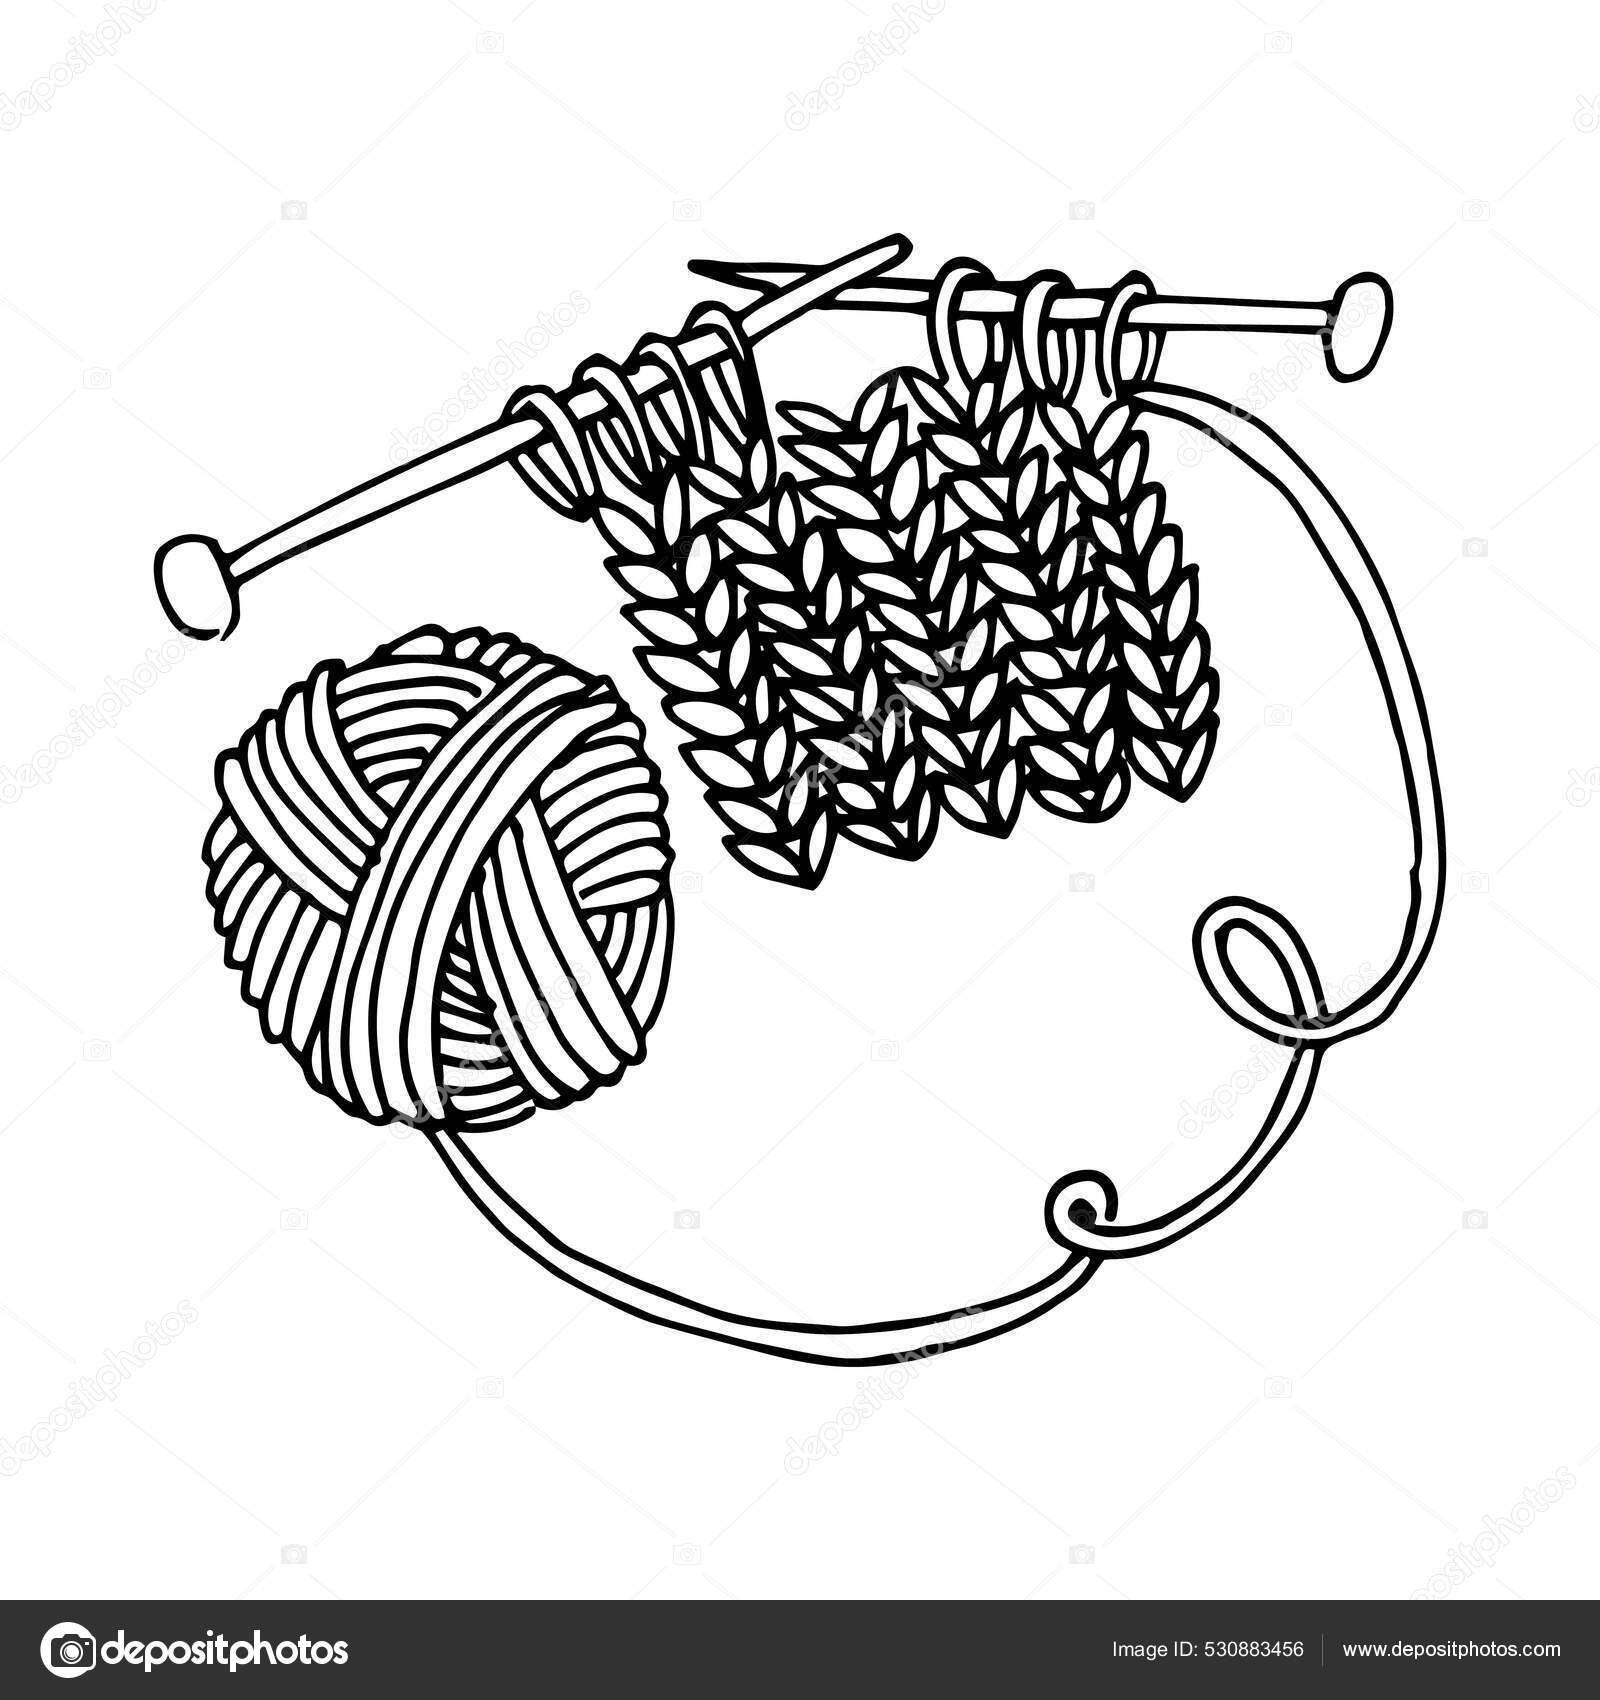 Knitting Needles SVG, Crochet Hook DXF, Yarn Ball Cut File, Crafting Vector